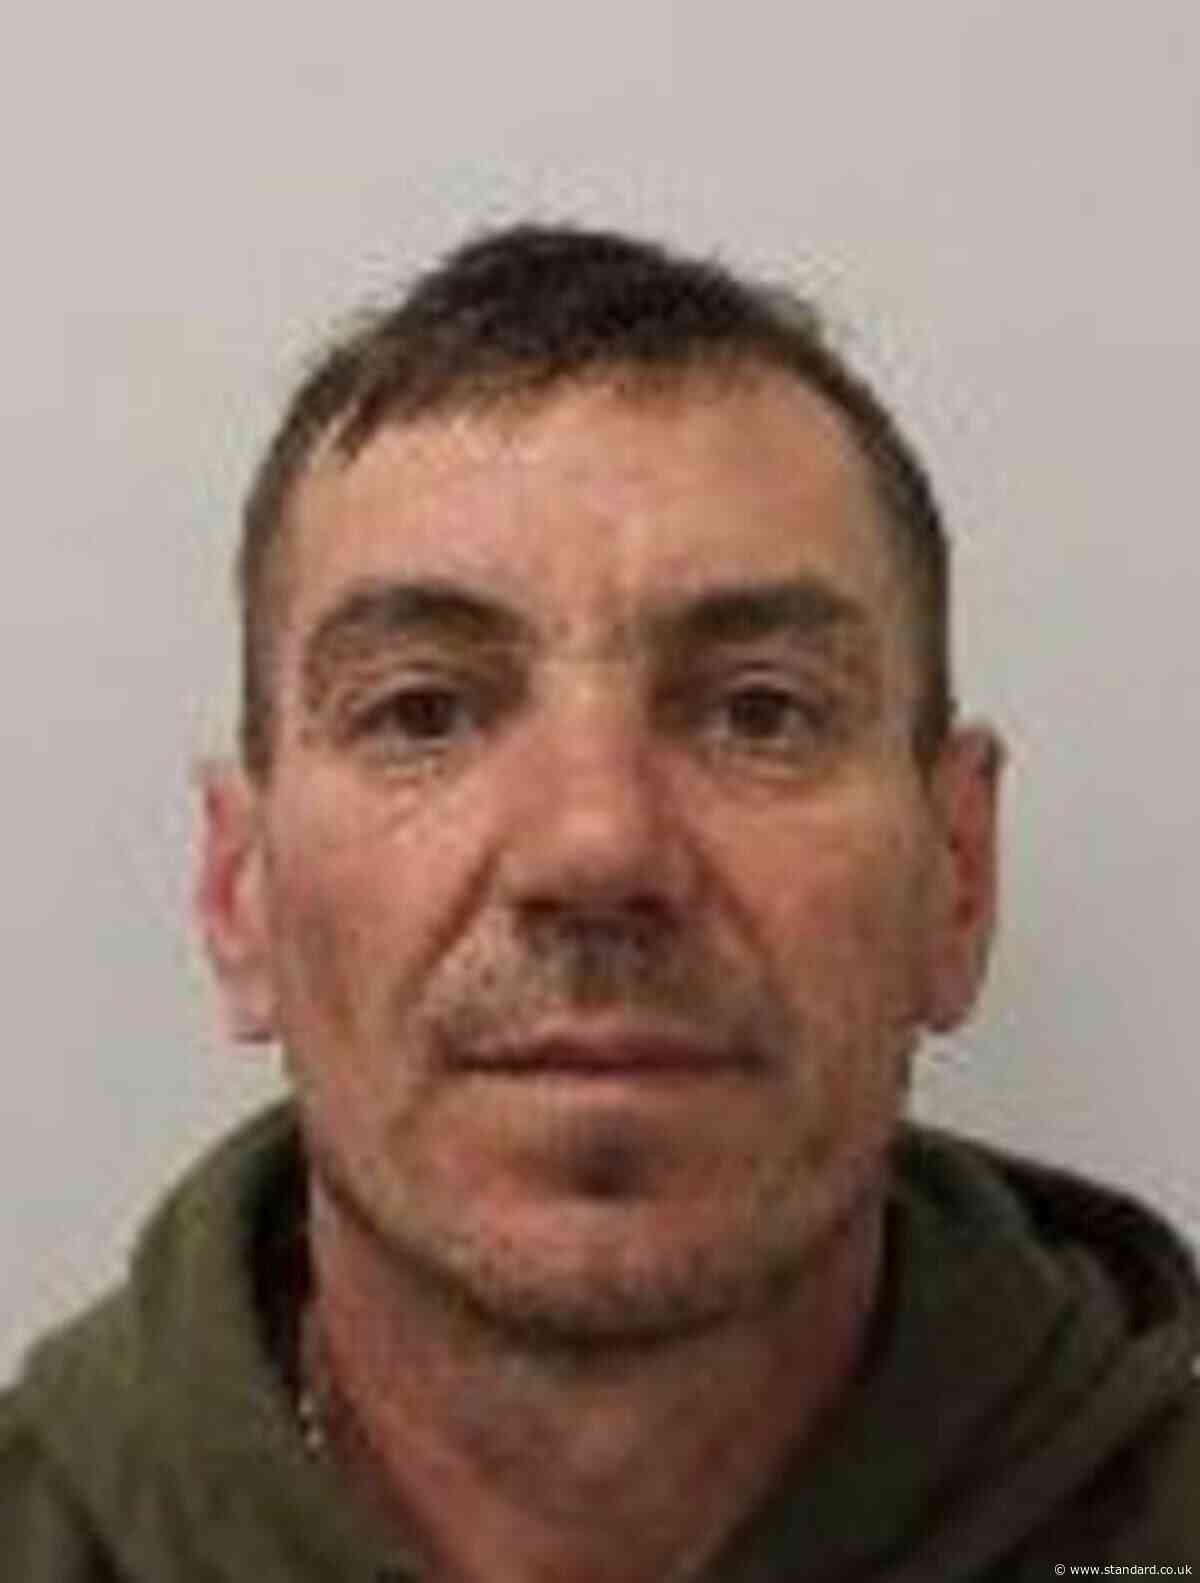 North London park rapist jailed after detectives hunt him down through bank card